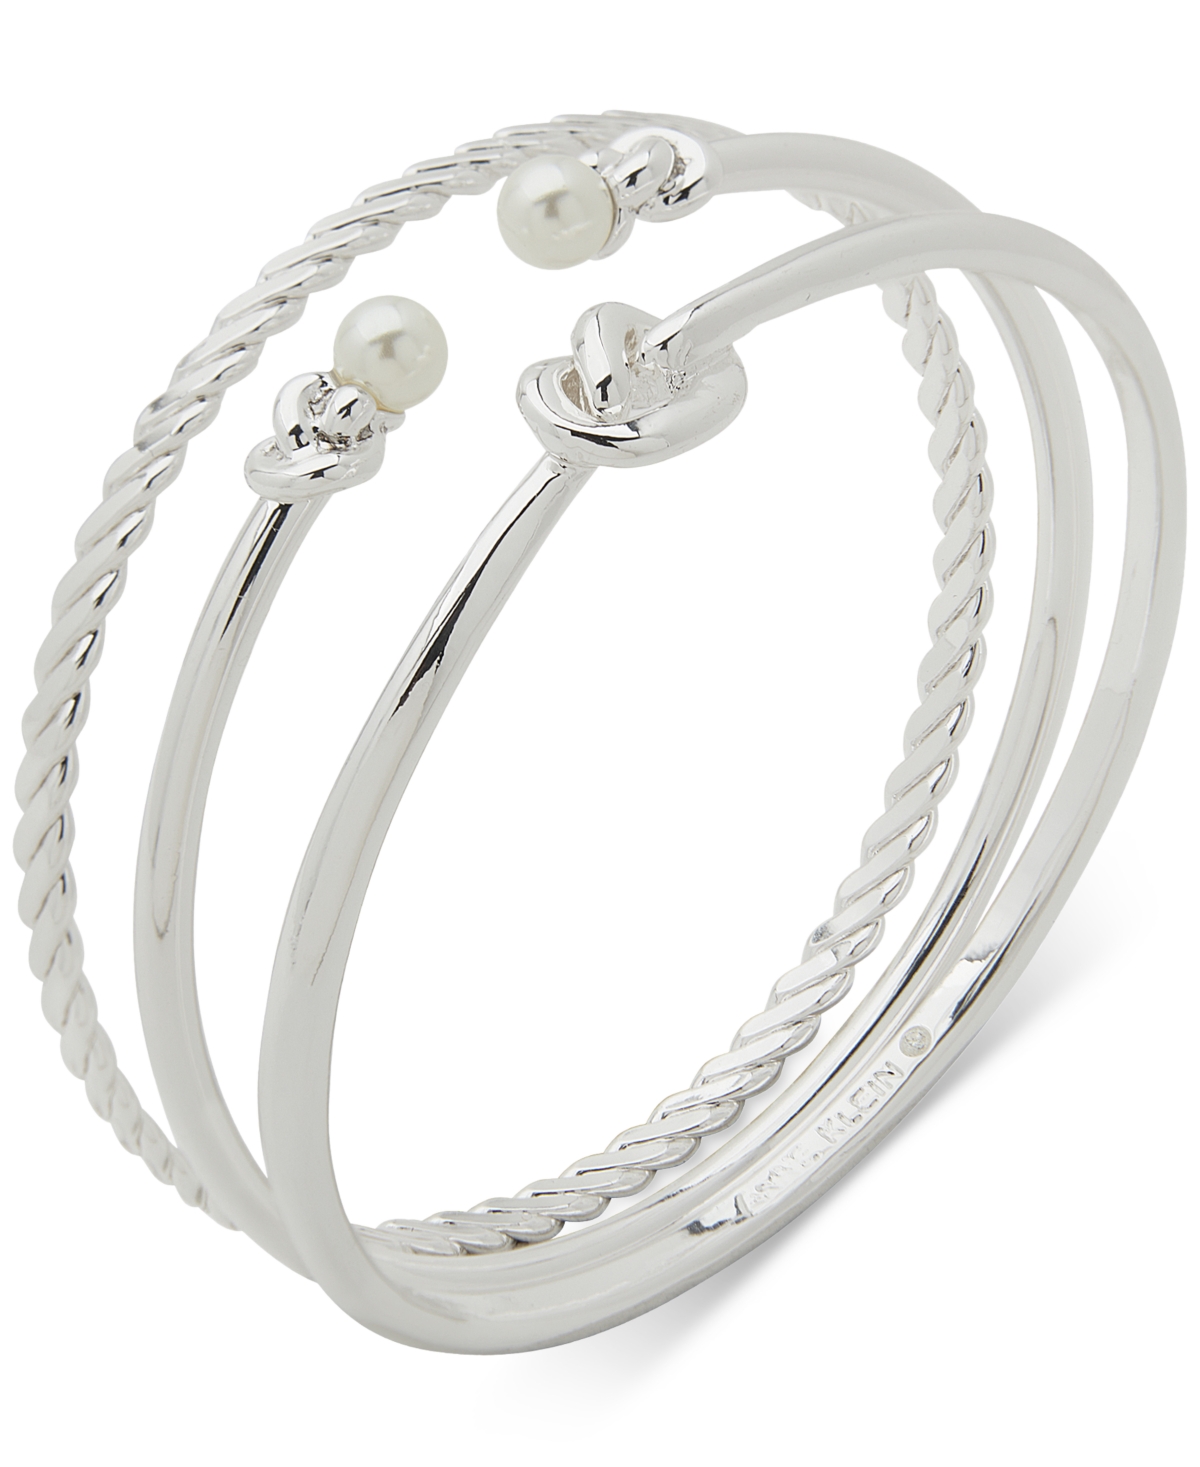 Silver-Tone 3-Pc. Set Knot & Imitation Pearl Bangle Bracelets - Pearl